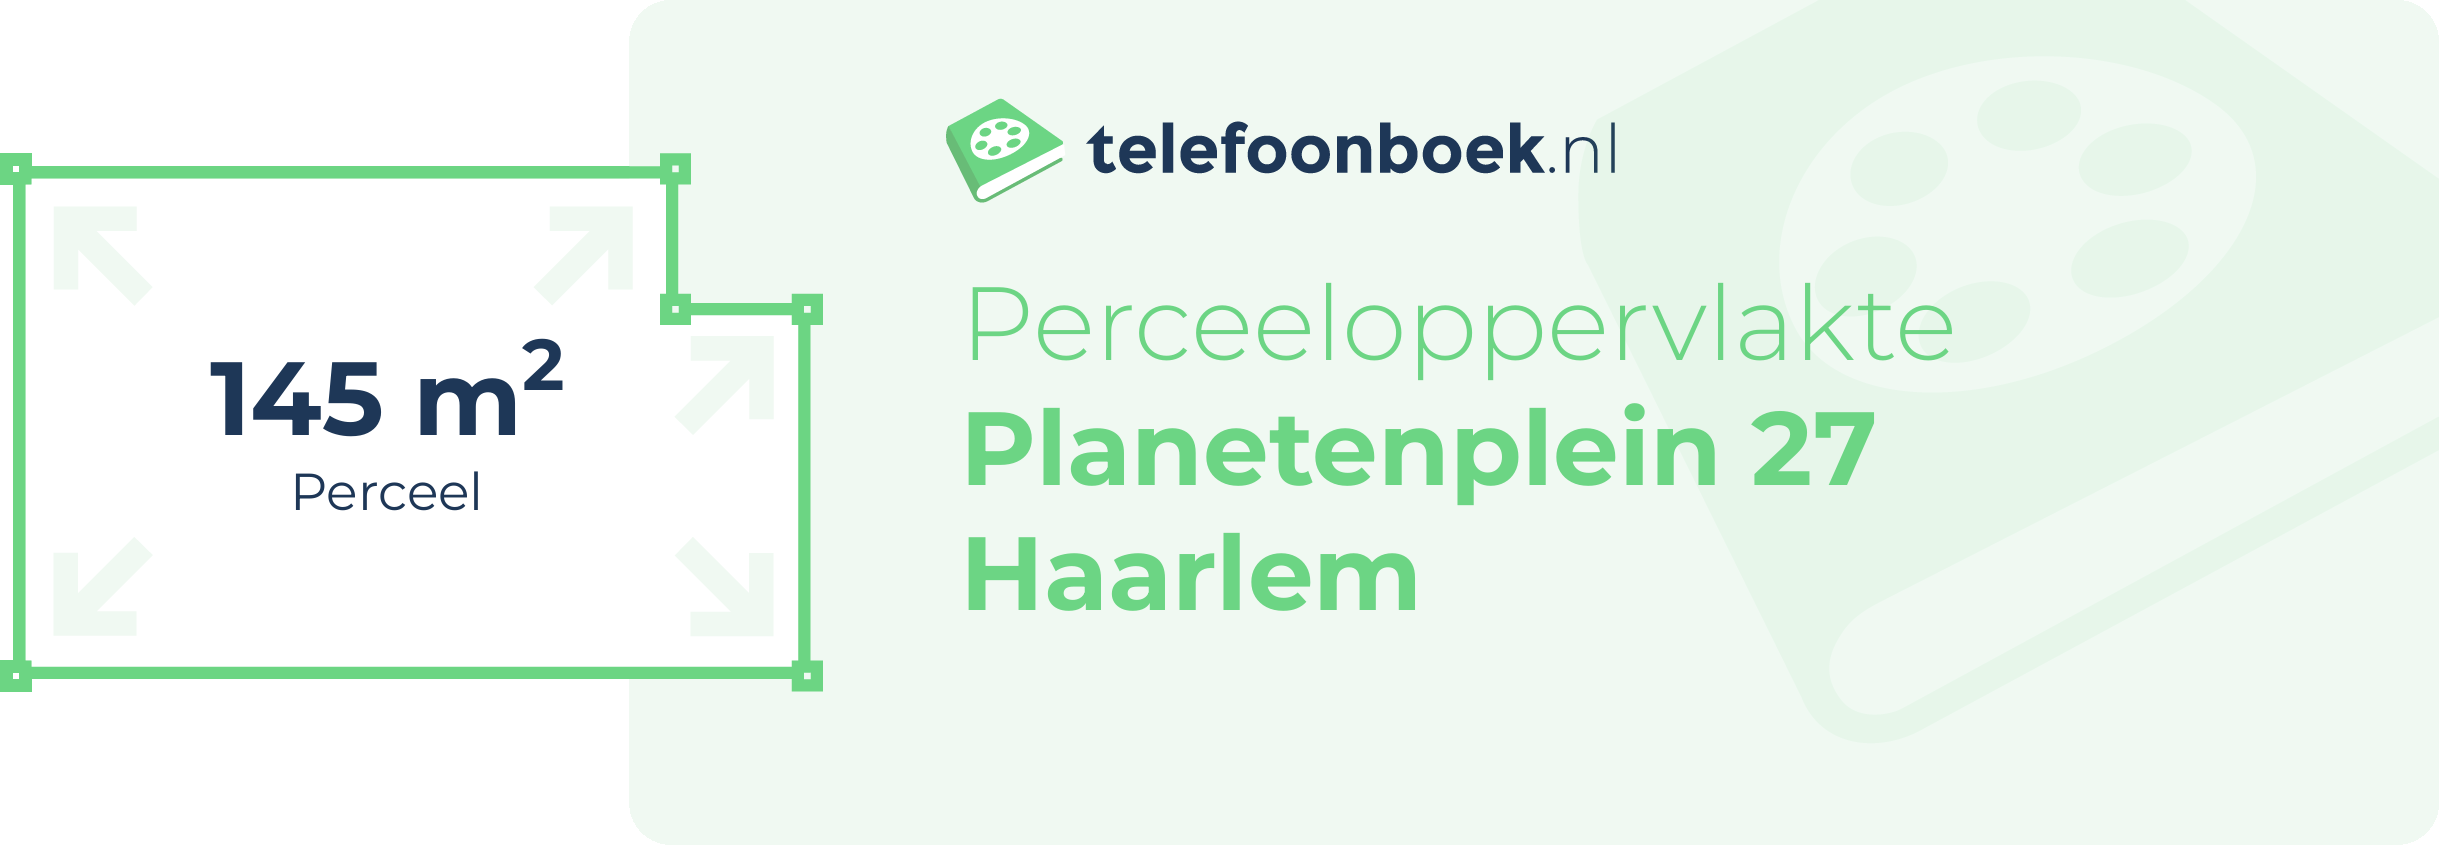 Perceeloppervlakte Planetenplein 27 Haarlem